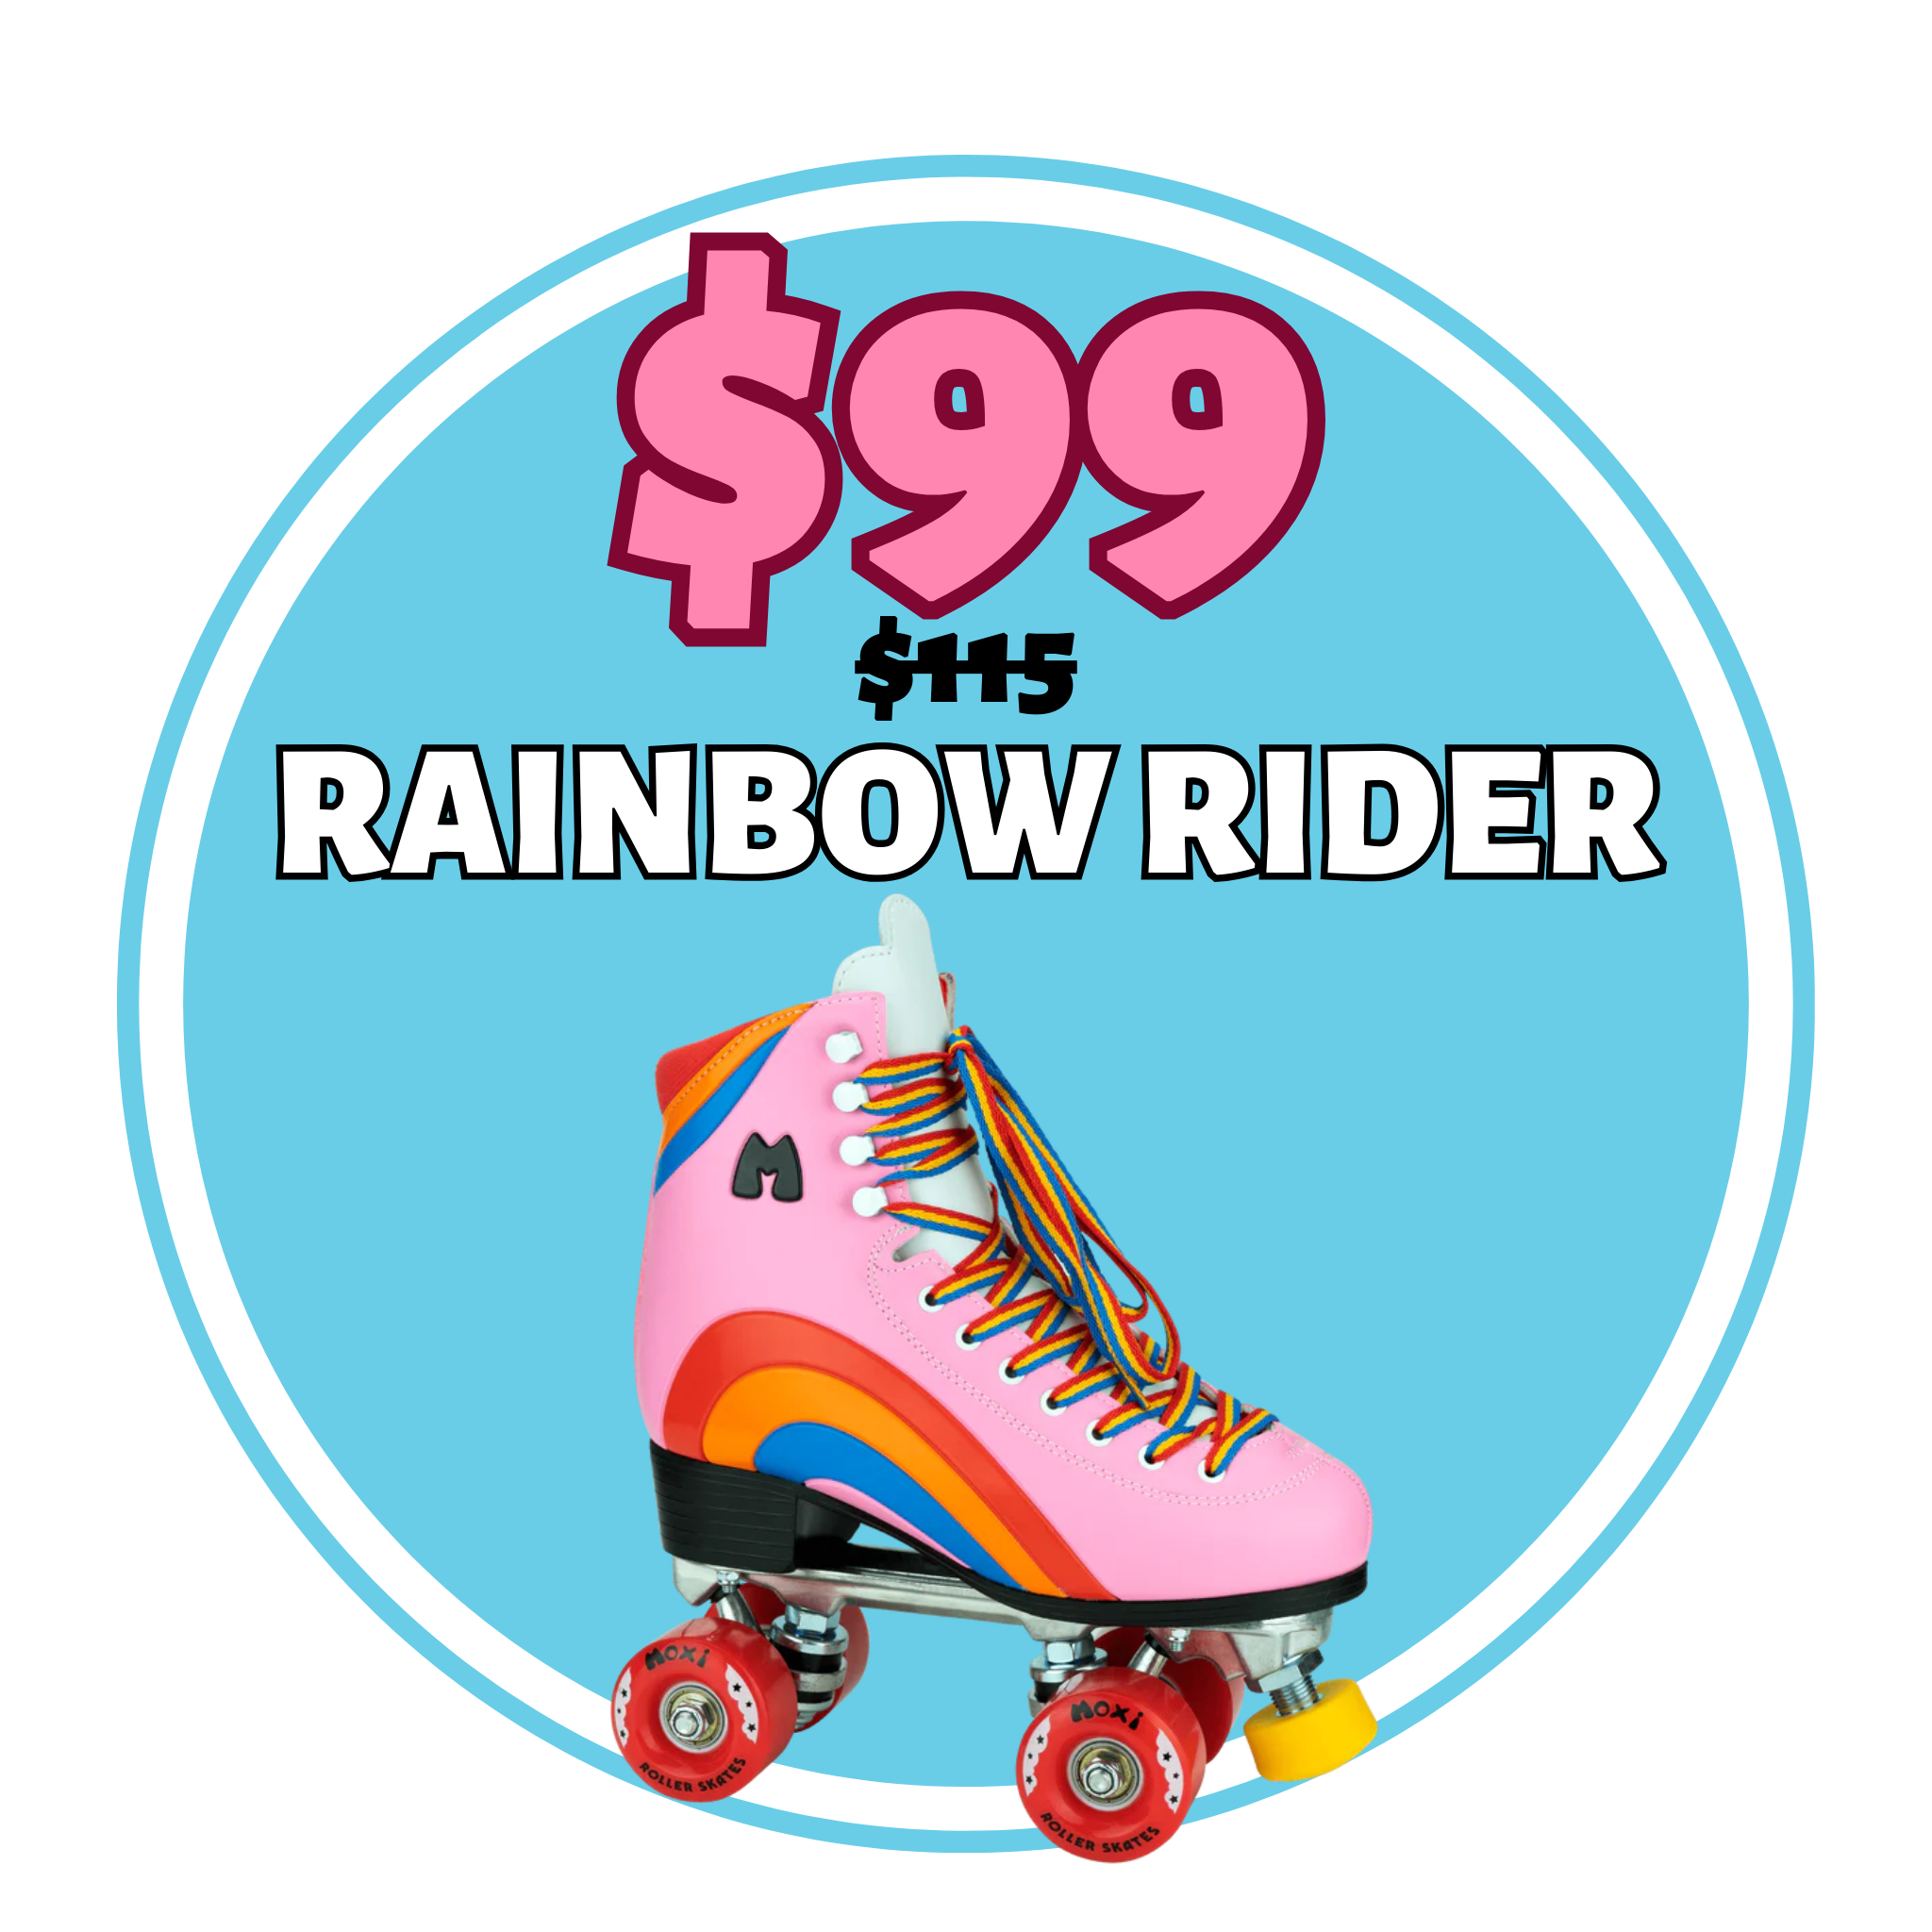 rainbow rider. regularly $155, on sale for $99